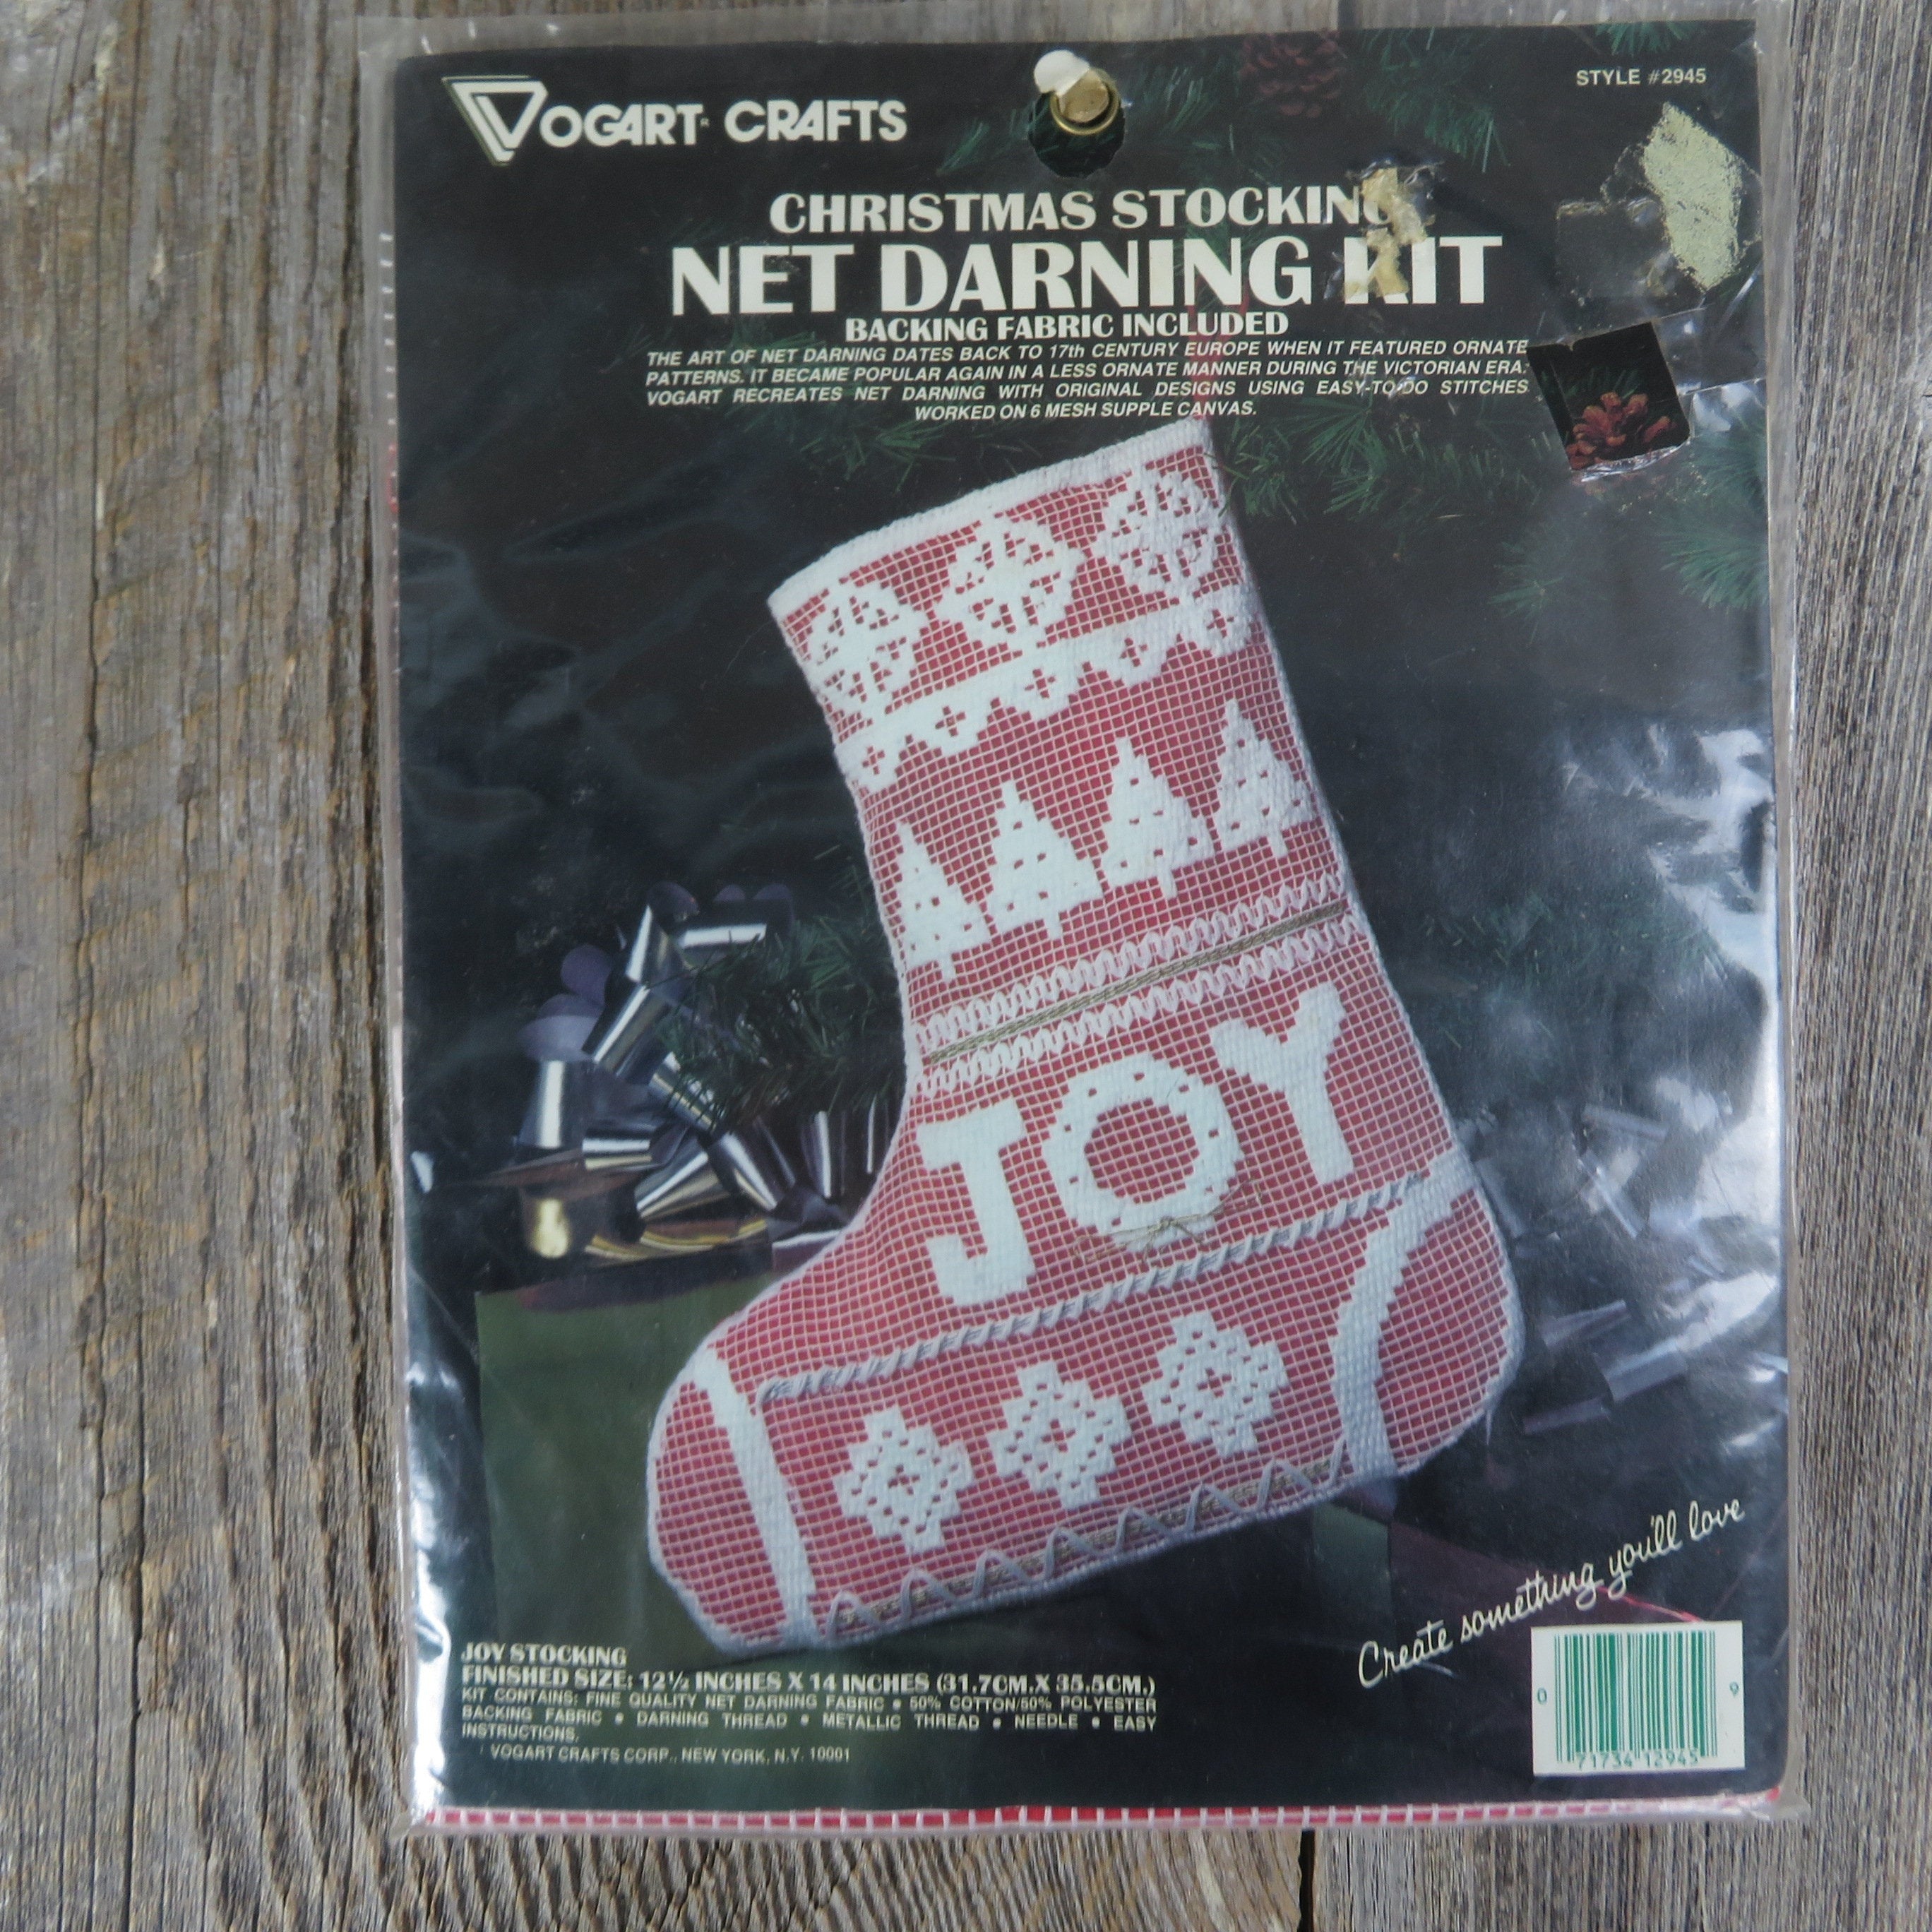 Vintage Christmas Table Runner Lace Net Darning Kit Candles Vogart